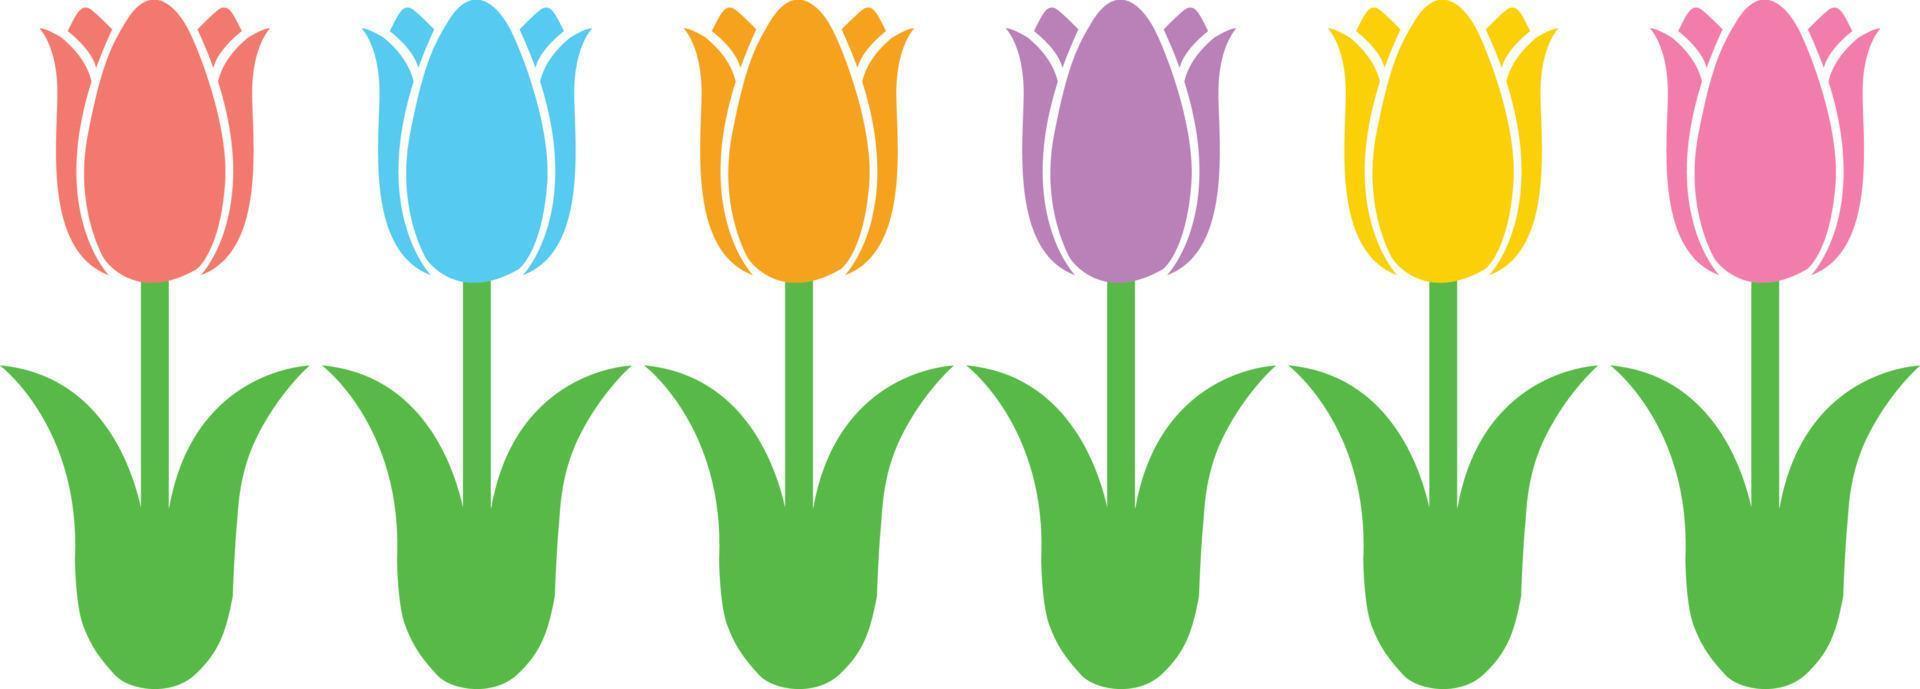 tulpen bloem 1 vector